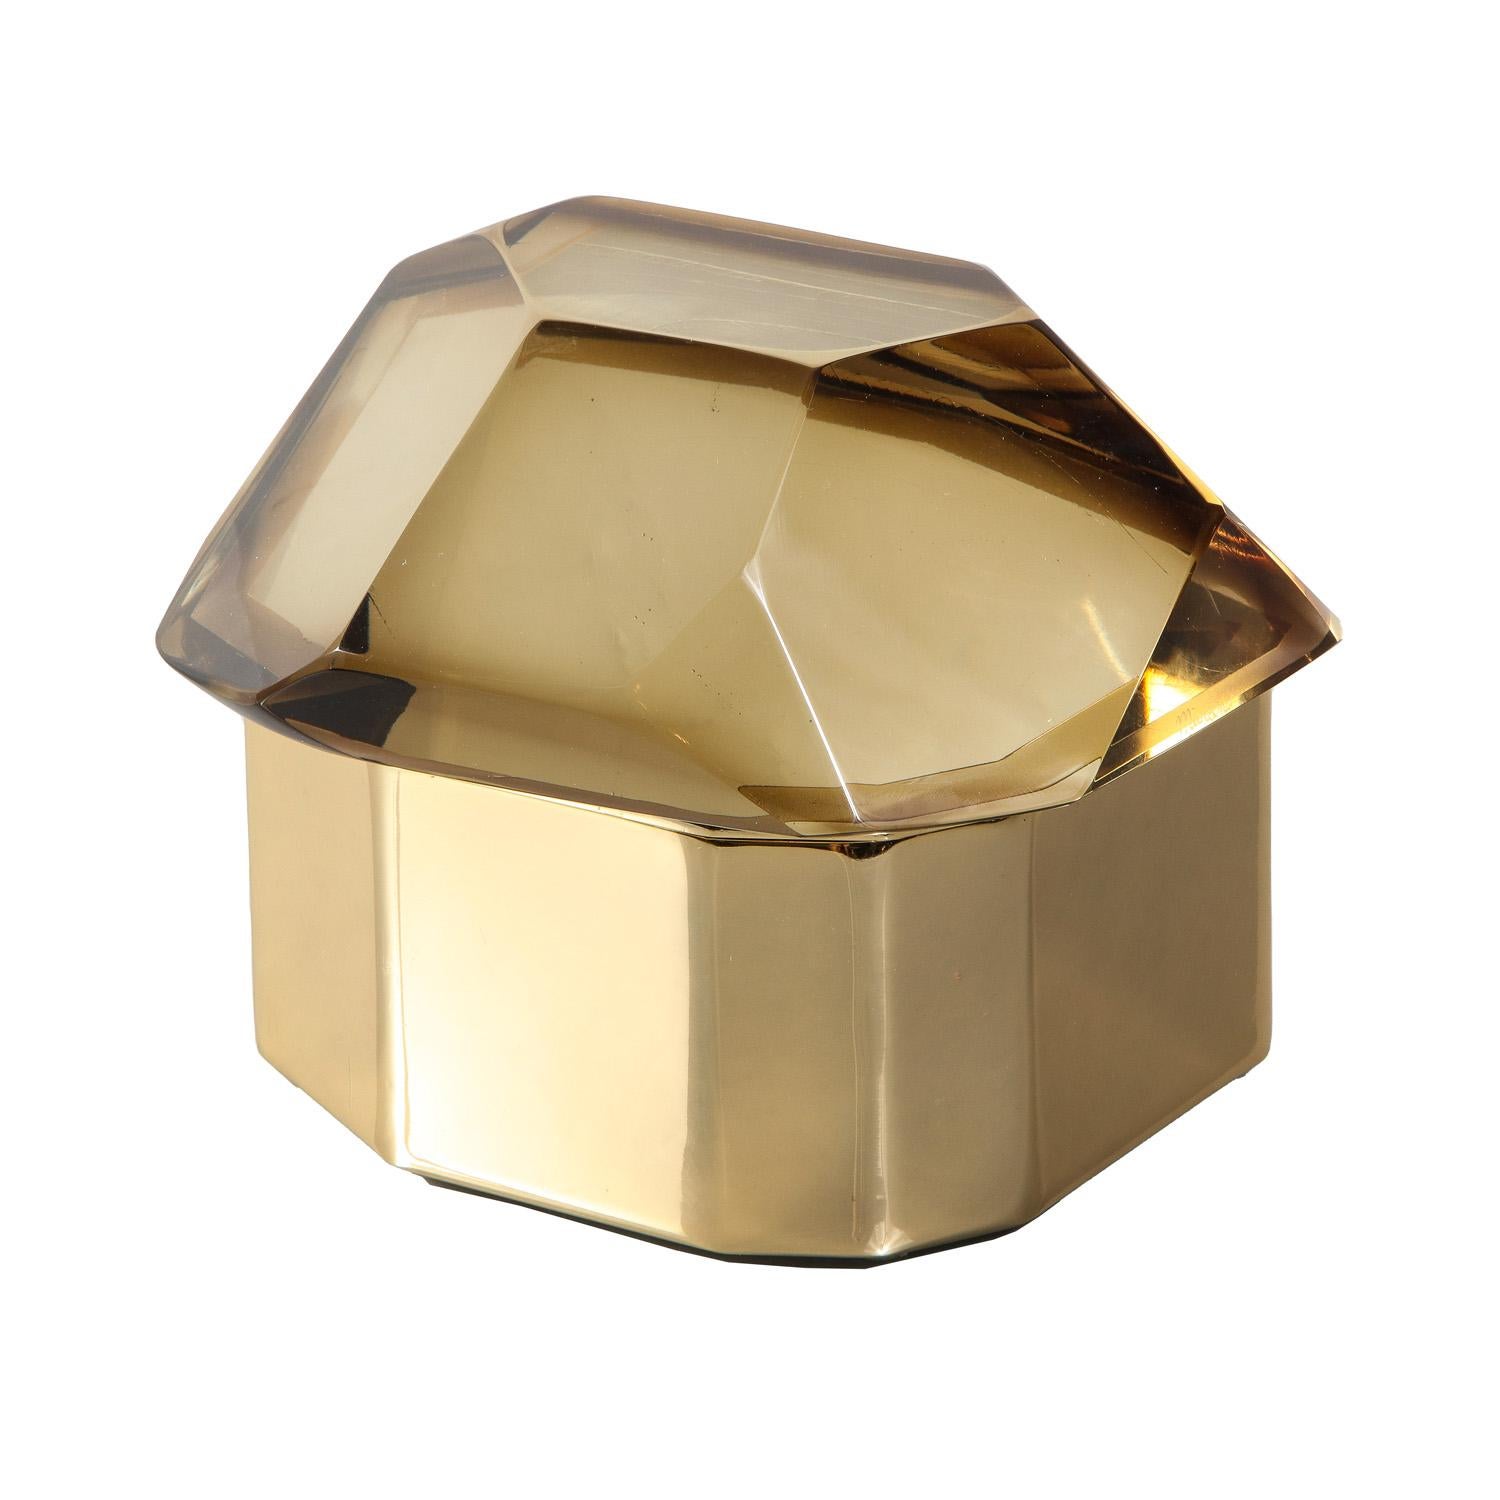 Murano gem cut art glass and brass lidded box with felt lining. Italy.